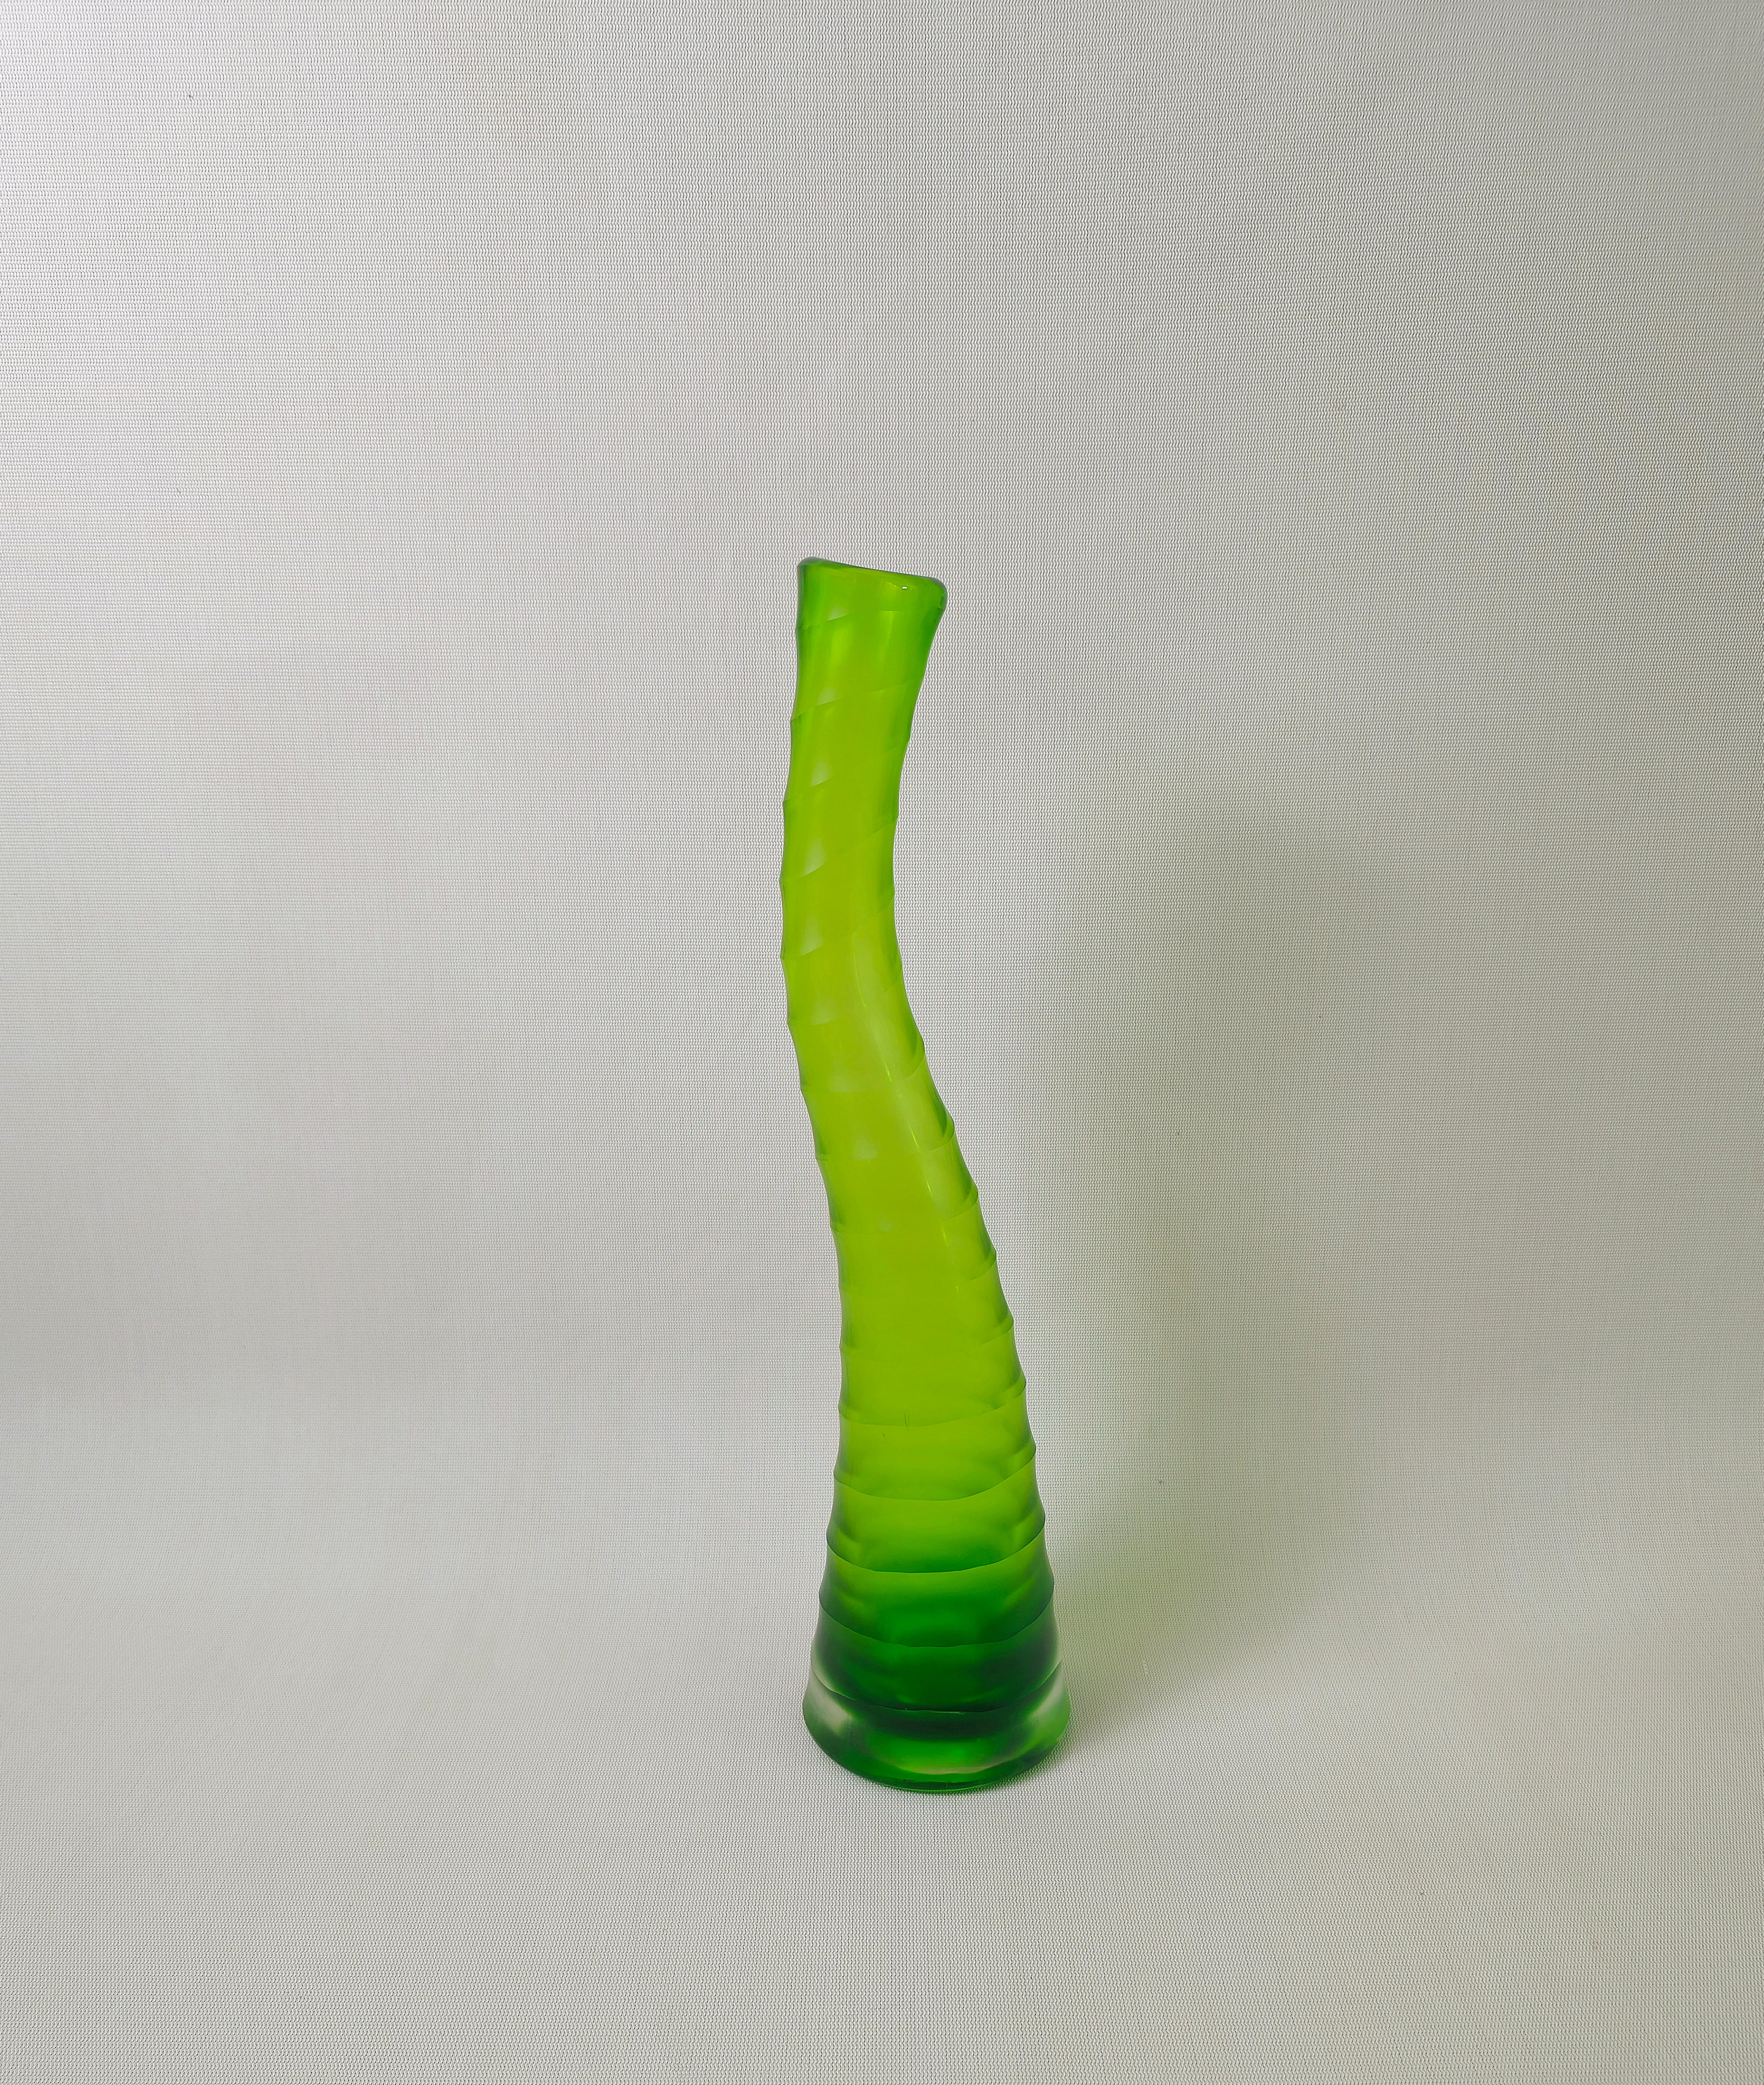 20th Century Vase Decorative Object Murano Glass Green Midcentury Modern Italian Design 1970s For Sale